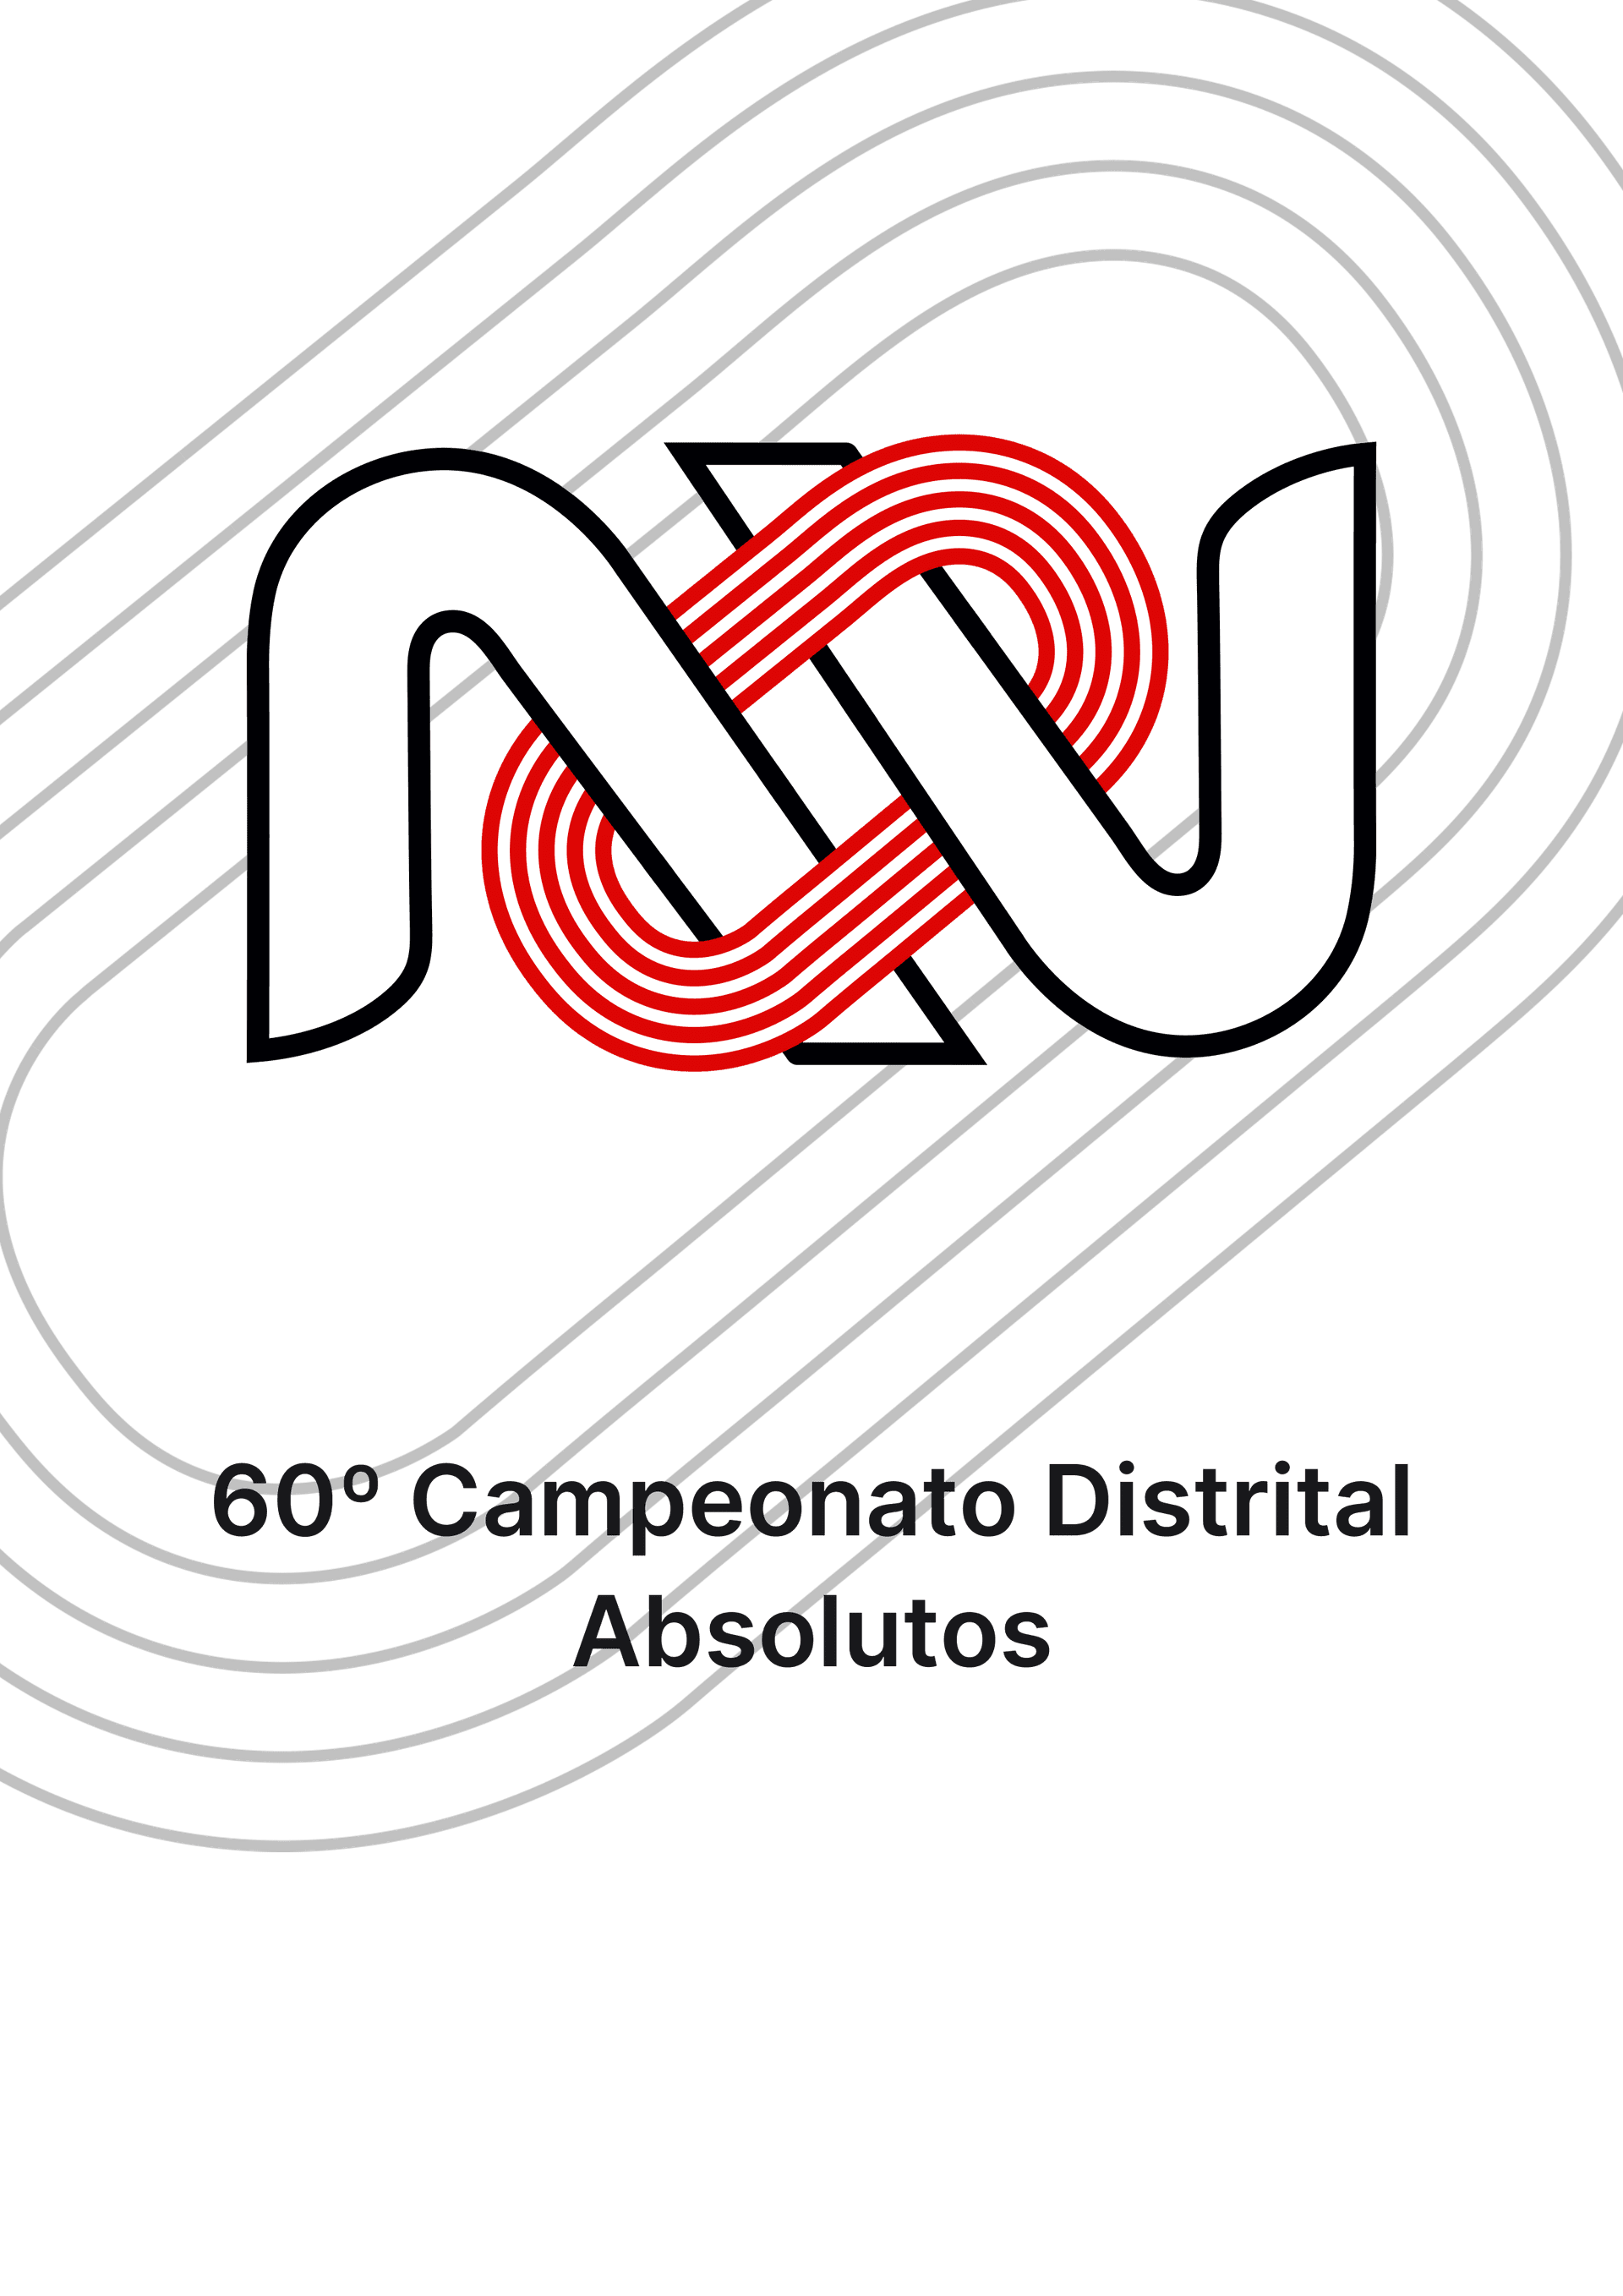 60º Campeonato Distrital Absolutos